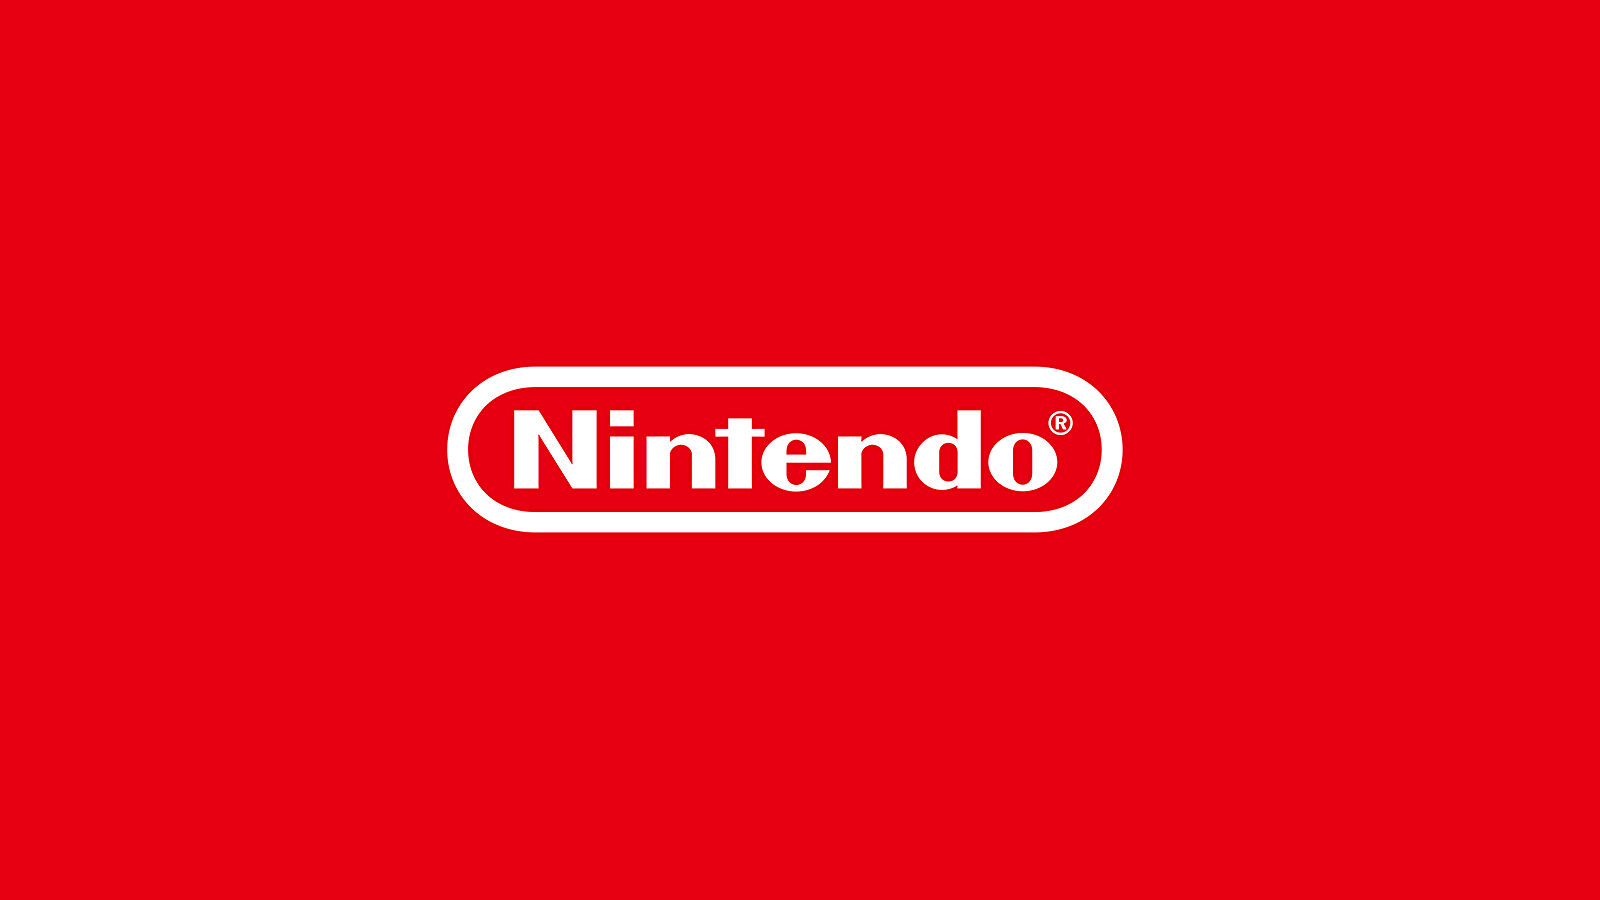 Nintendo Vld9 munud